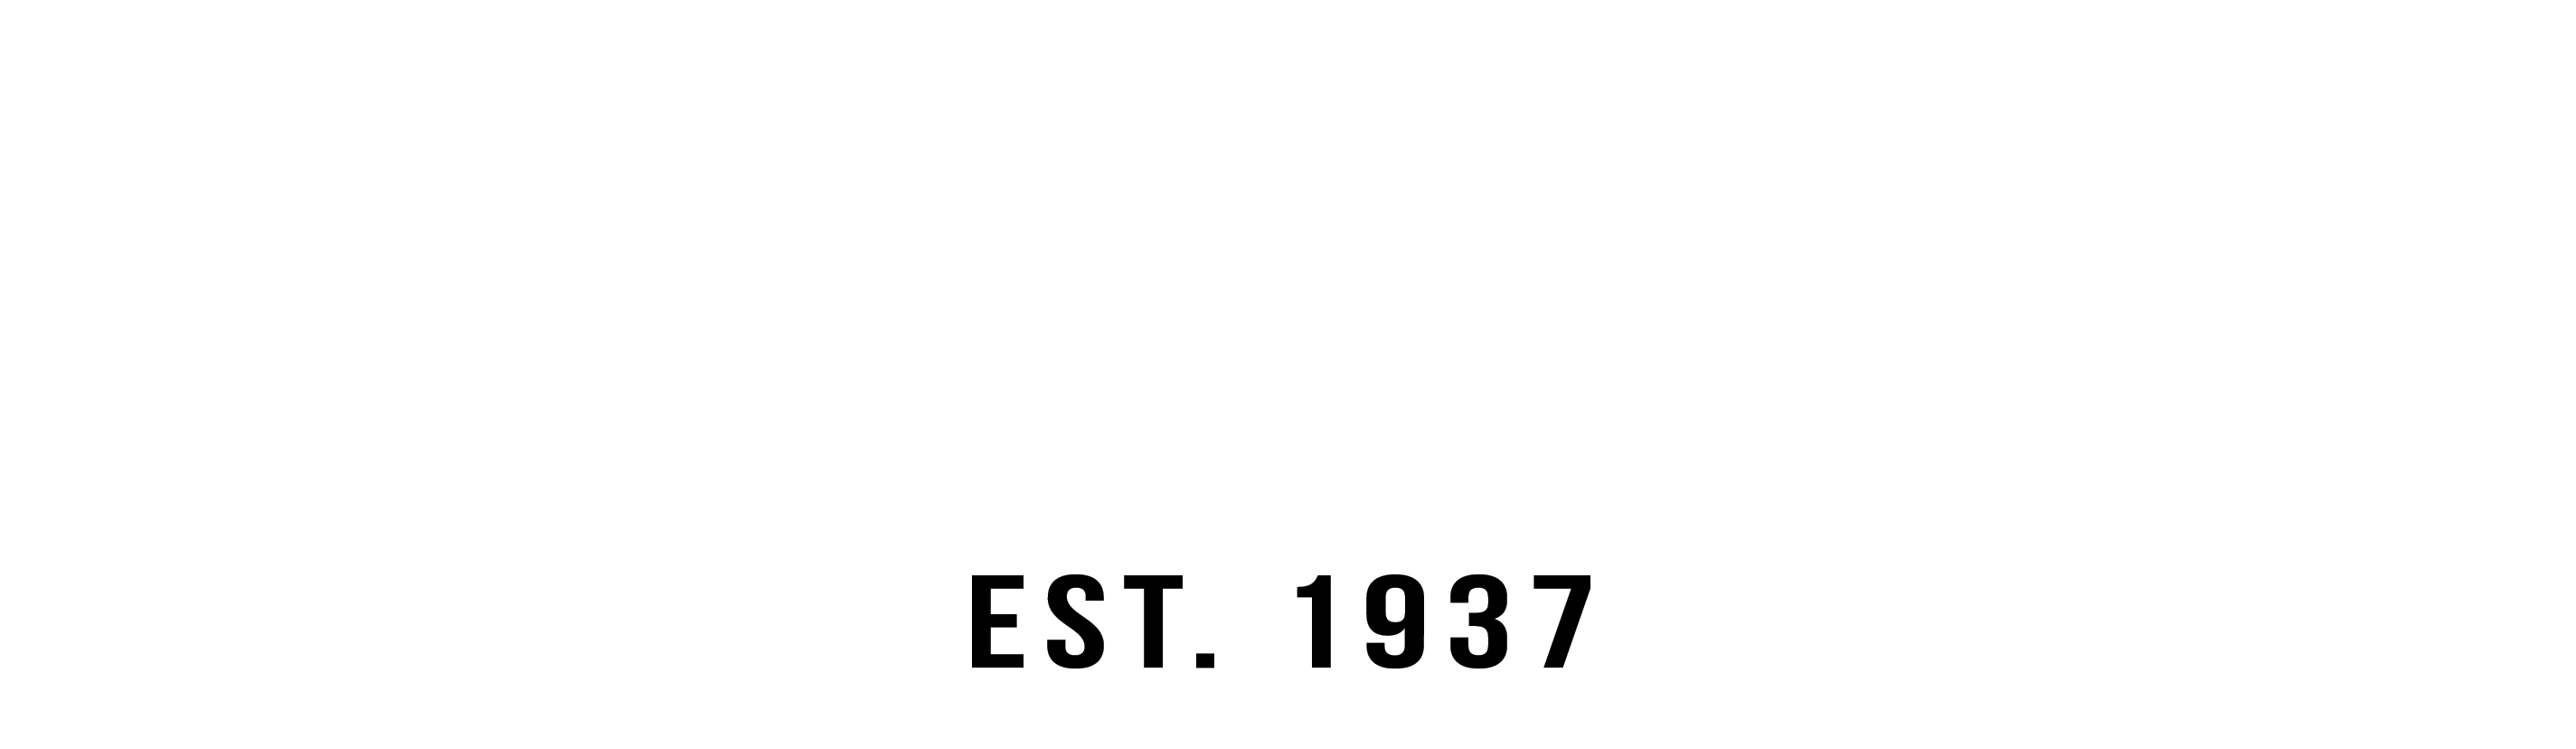 Lankford's Midtown logo top